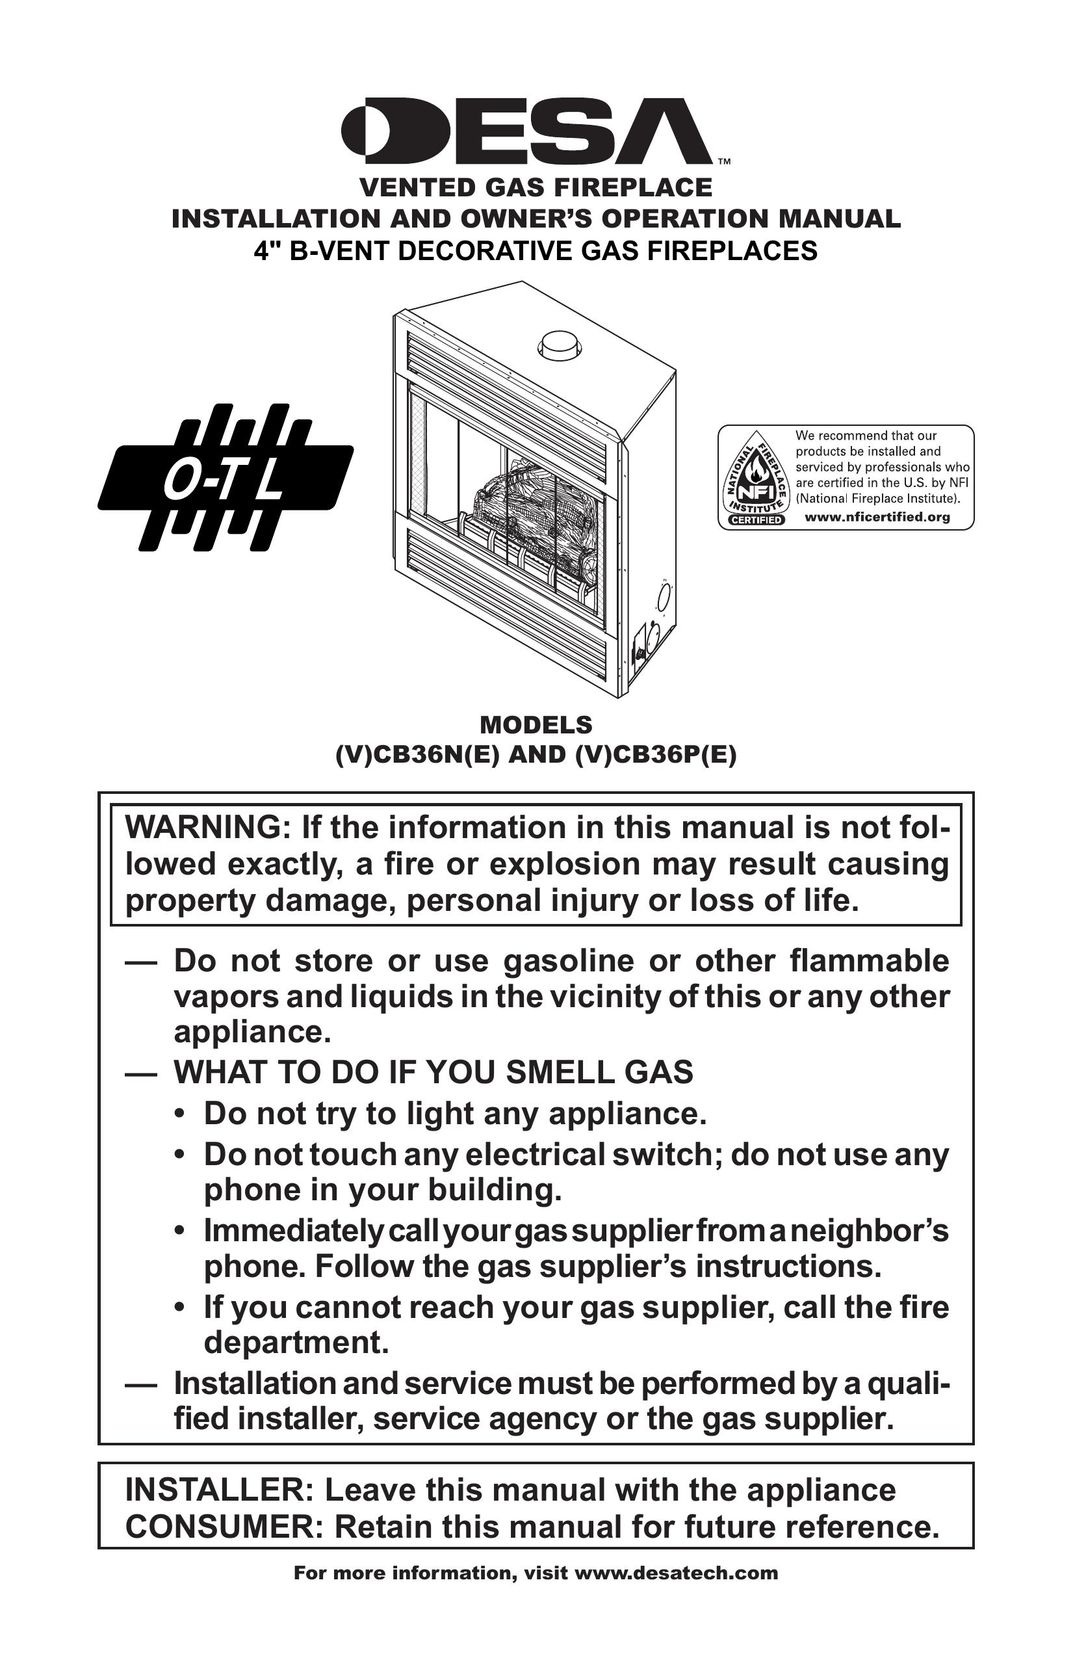 Desa (V)CB36N(E) Indoor Fireplace User Manual